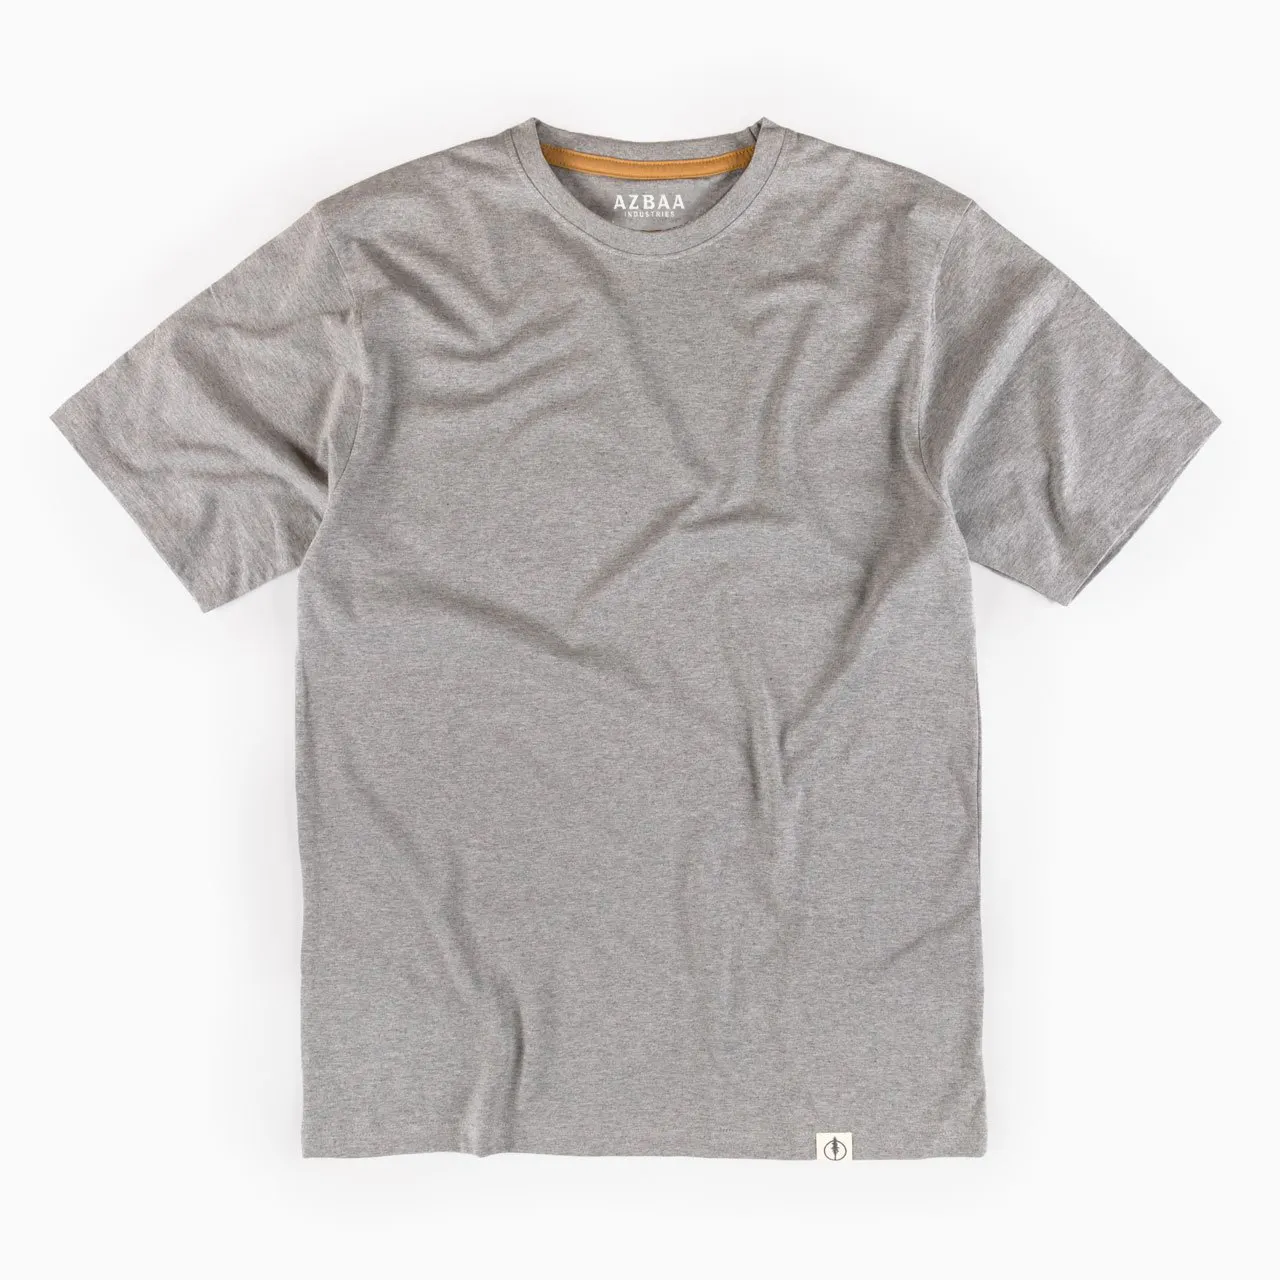 design your own high quality 100% ringspun cotton t shirts/men long tall plain light gray t shirts